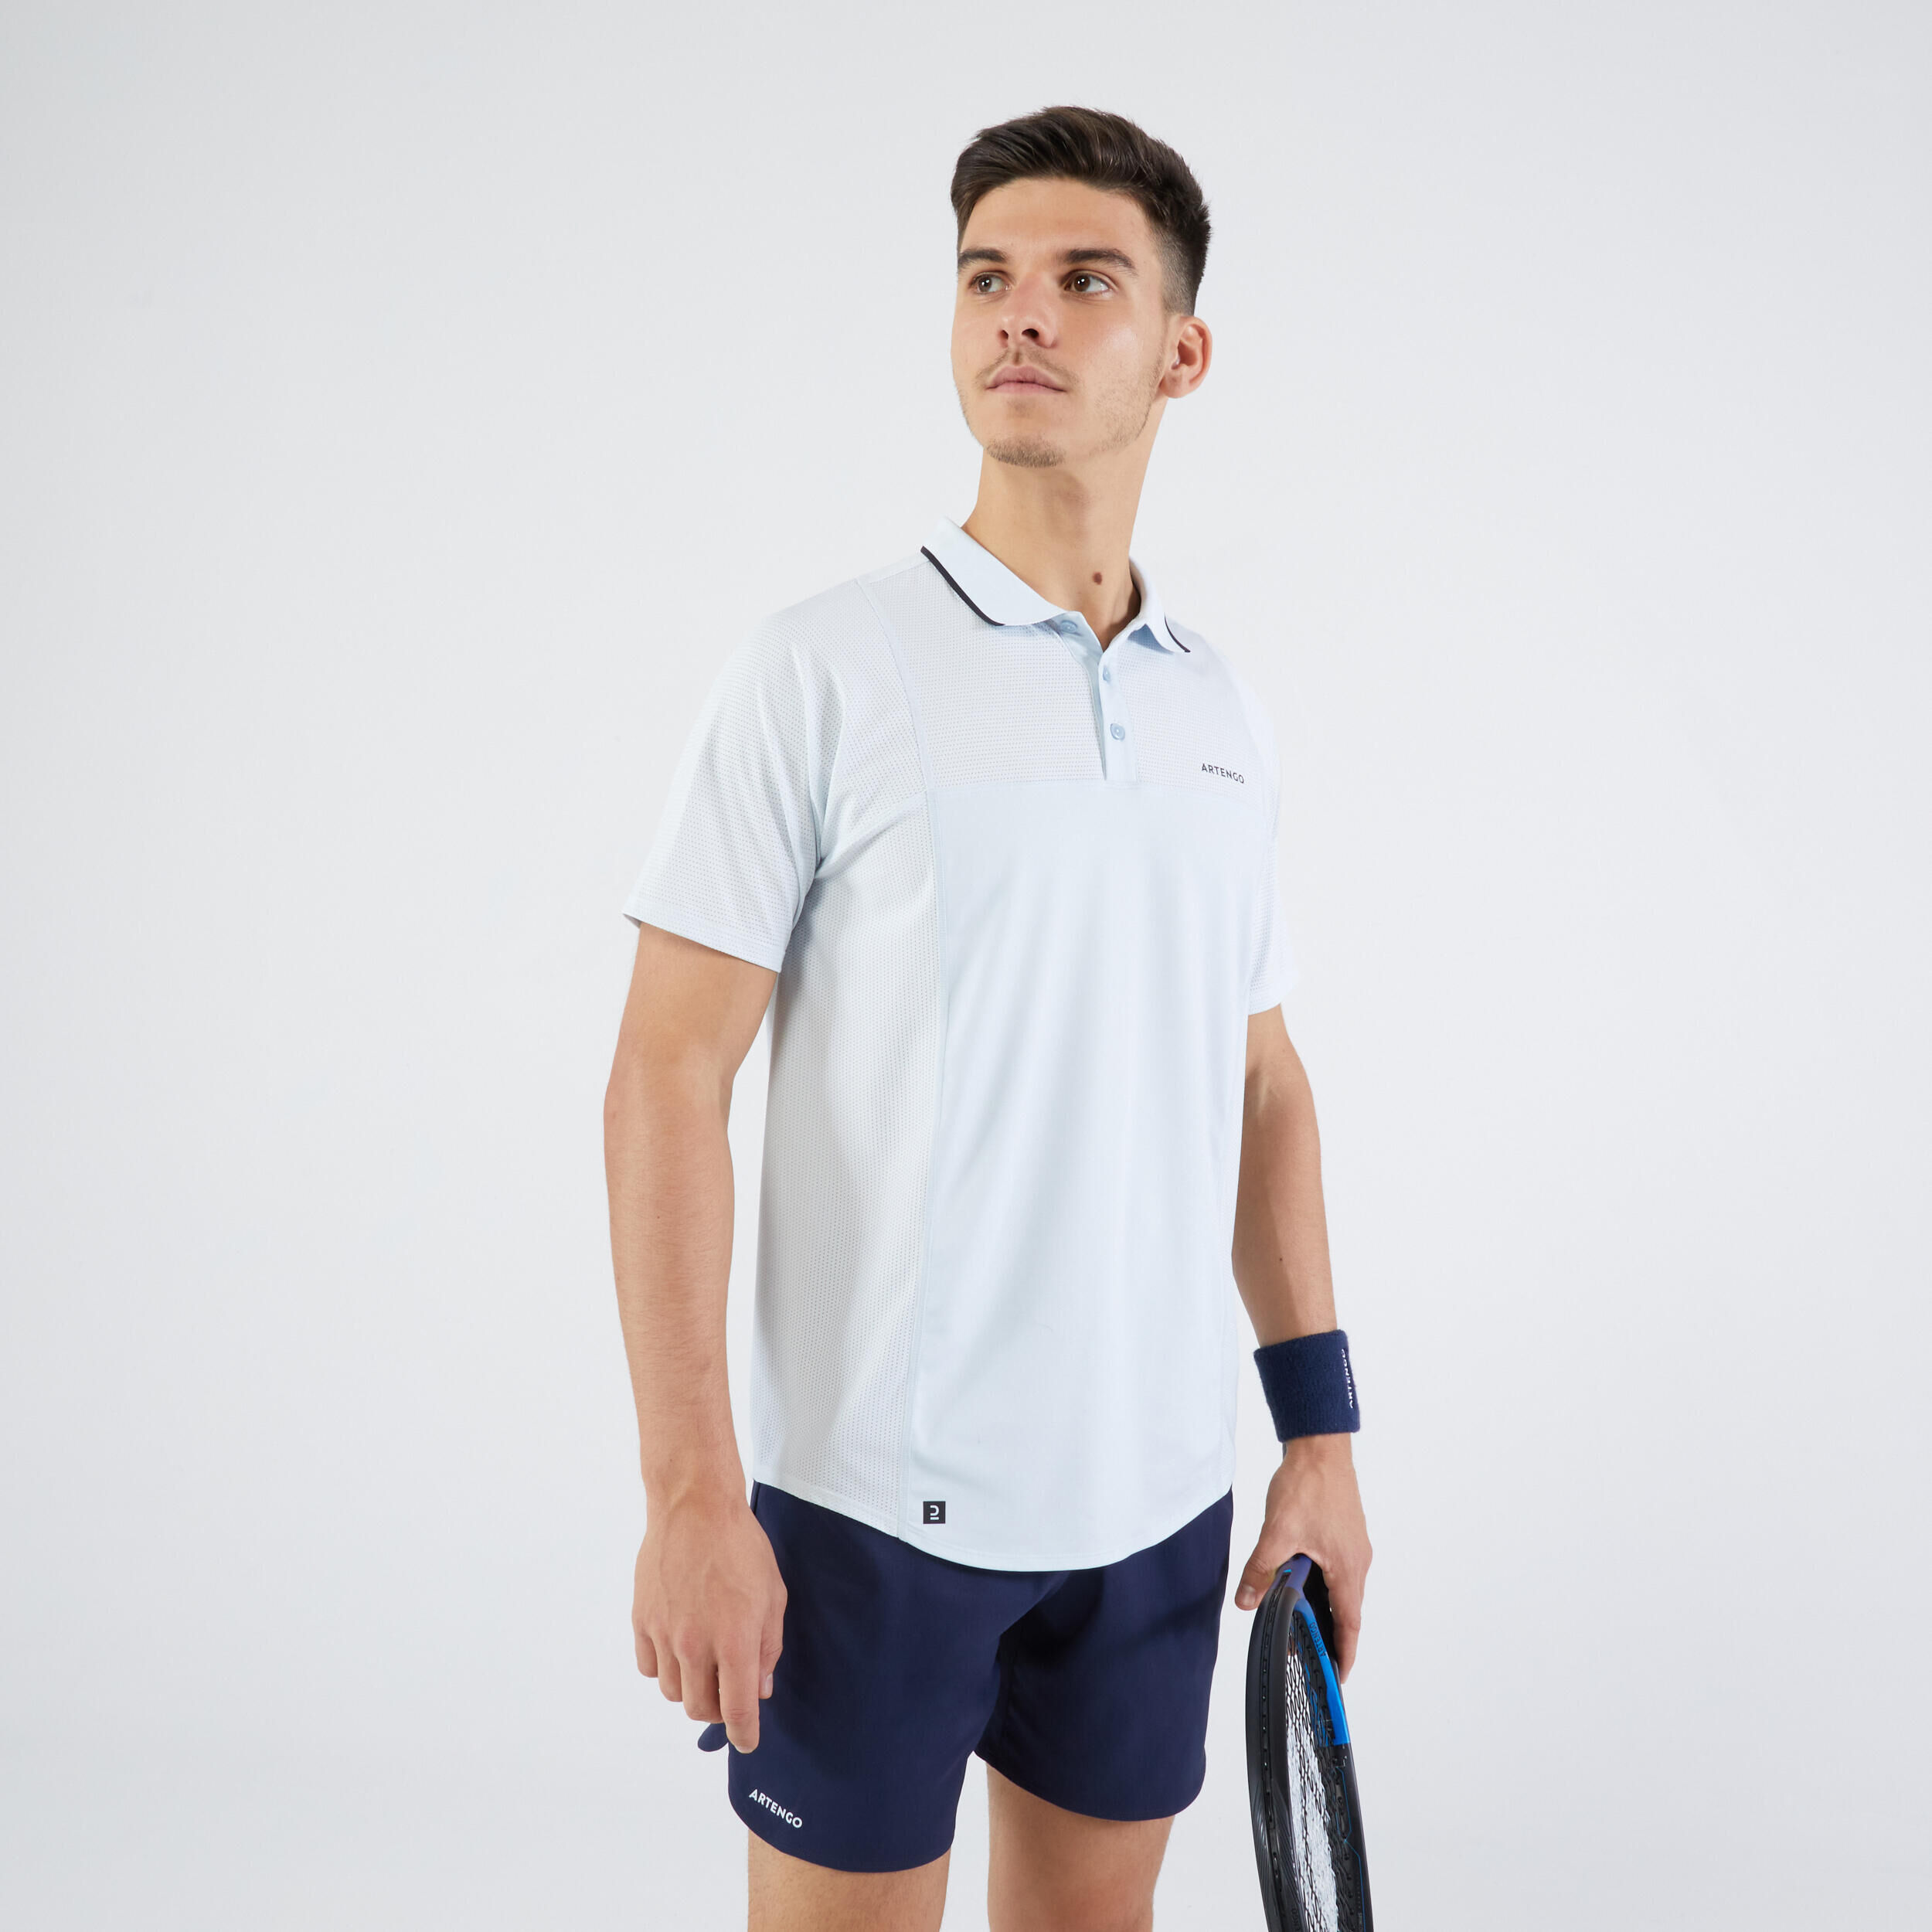 ARTENGO Men's Short-Sleeved Tennis Polo Dry - Light Grey/Black